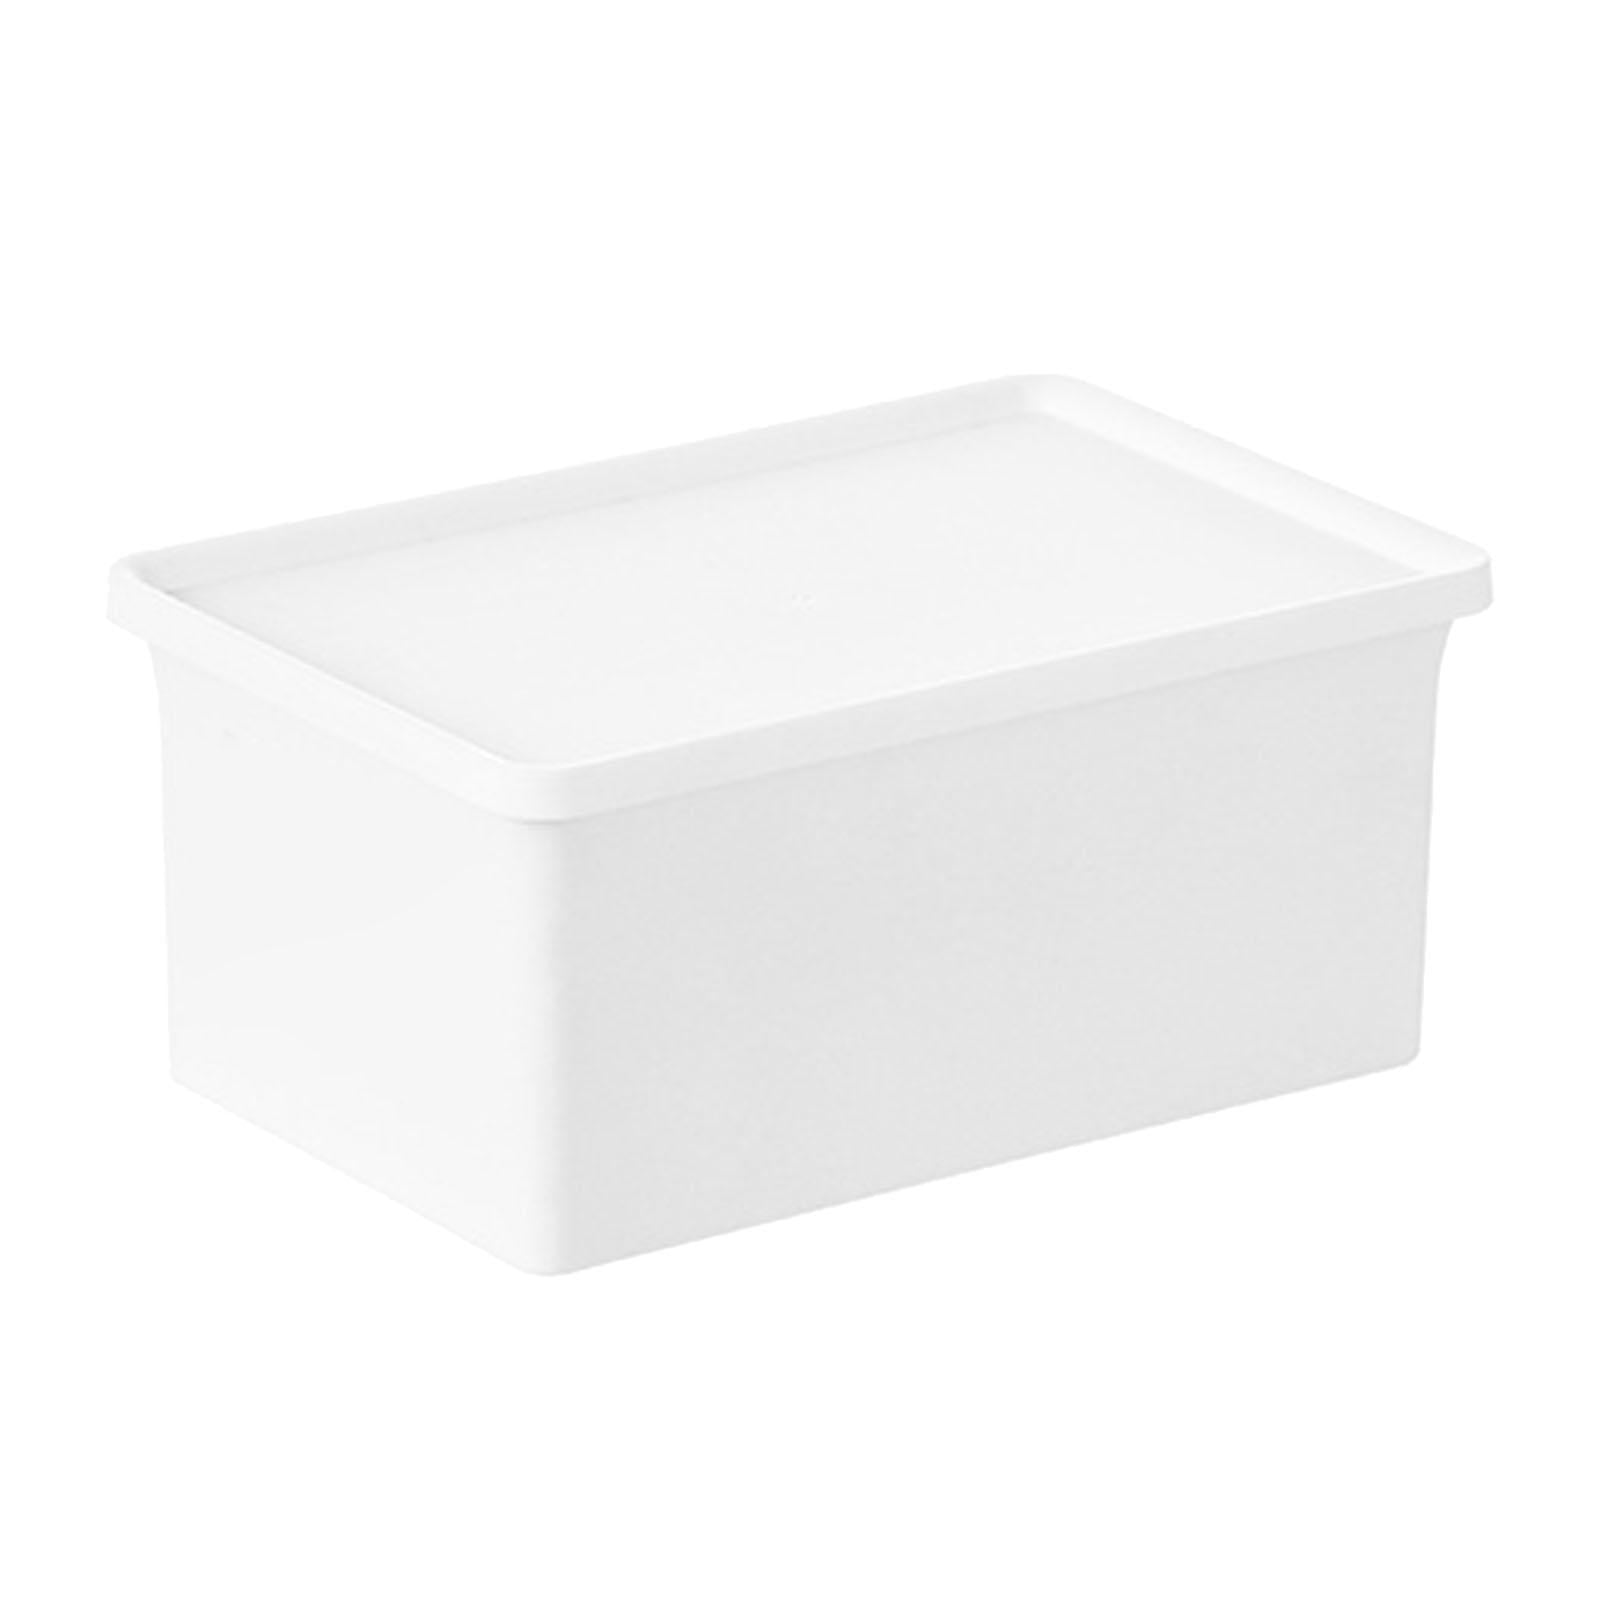 Laundry Detergent Storage Box, Plastic Storage Box With Lid, White